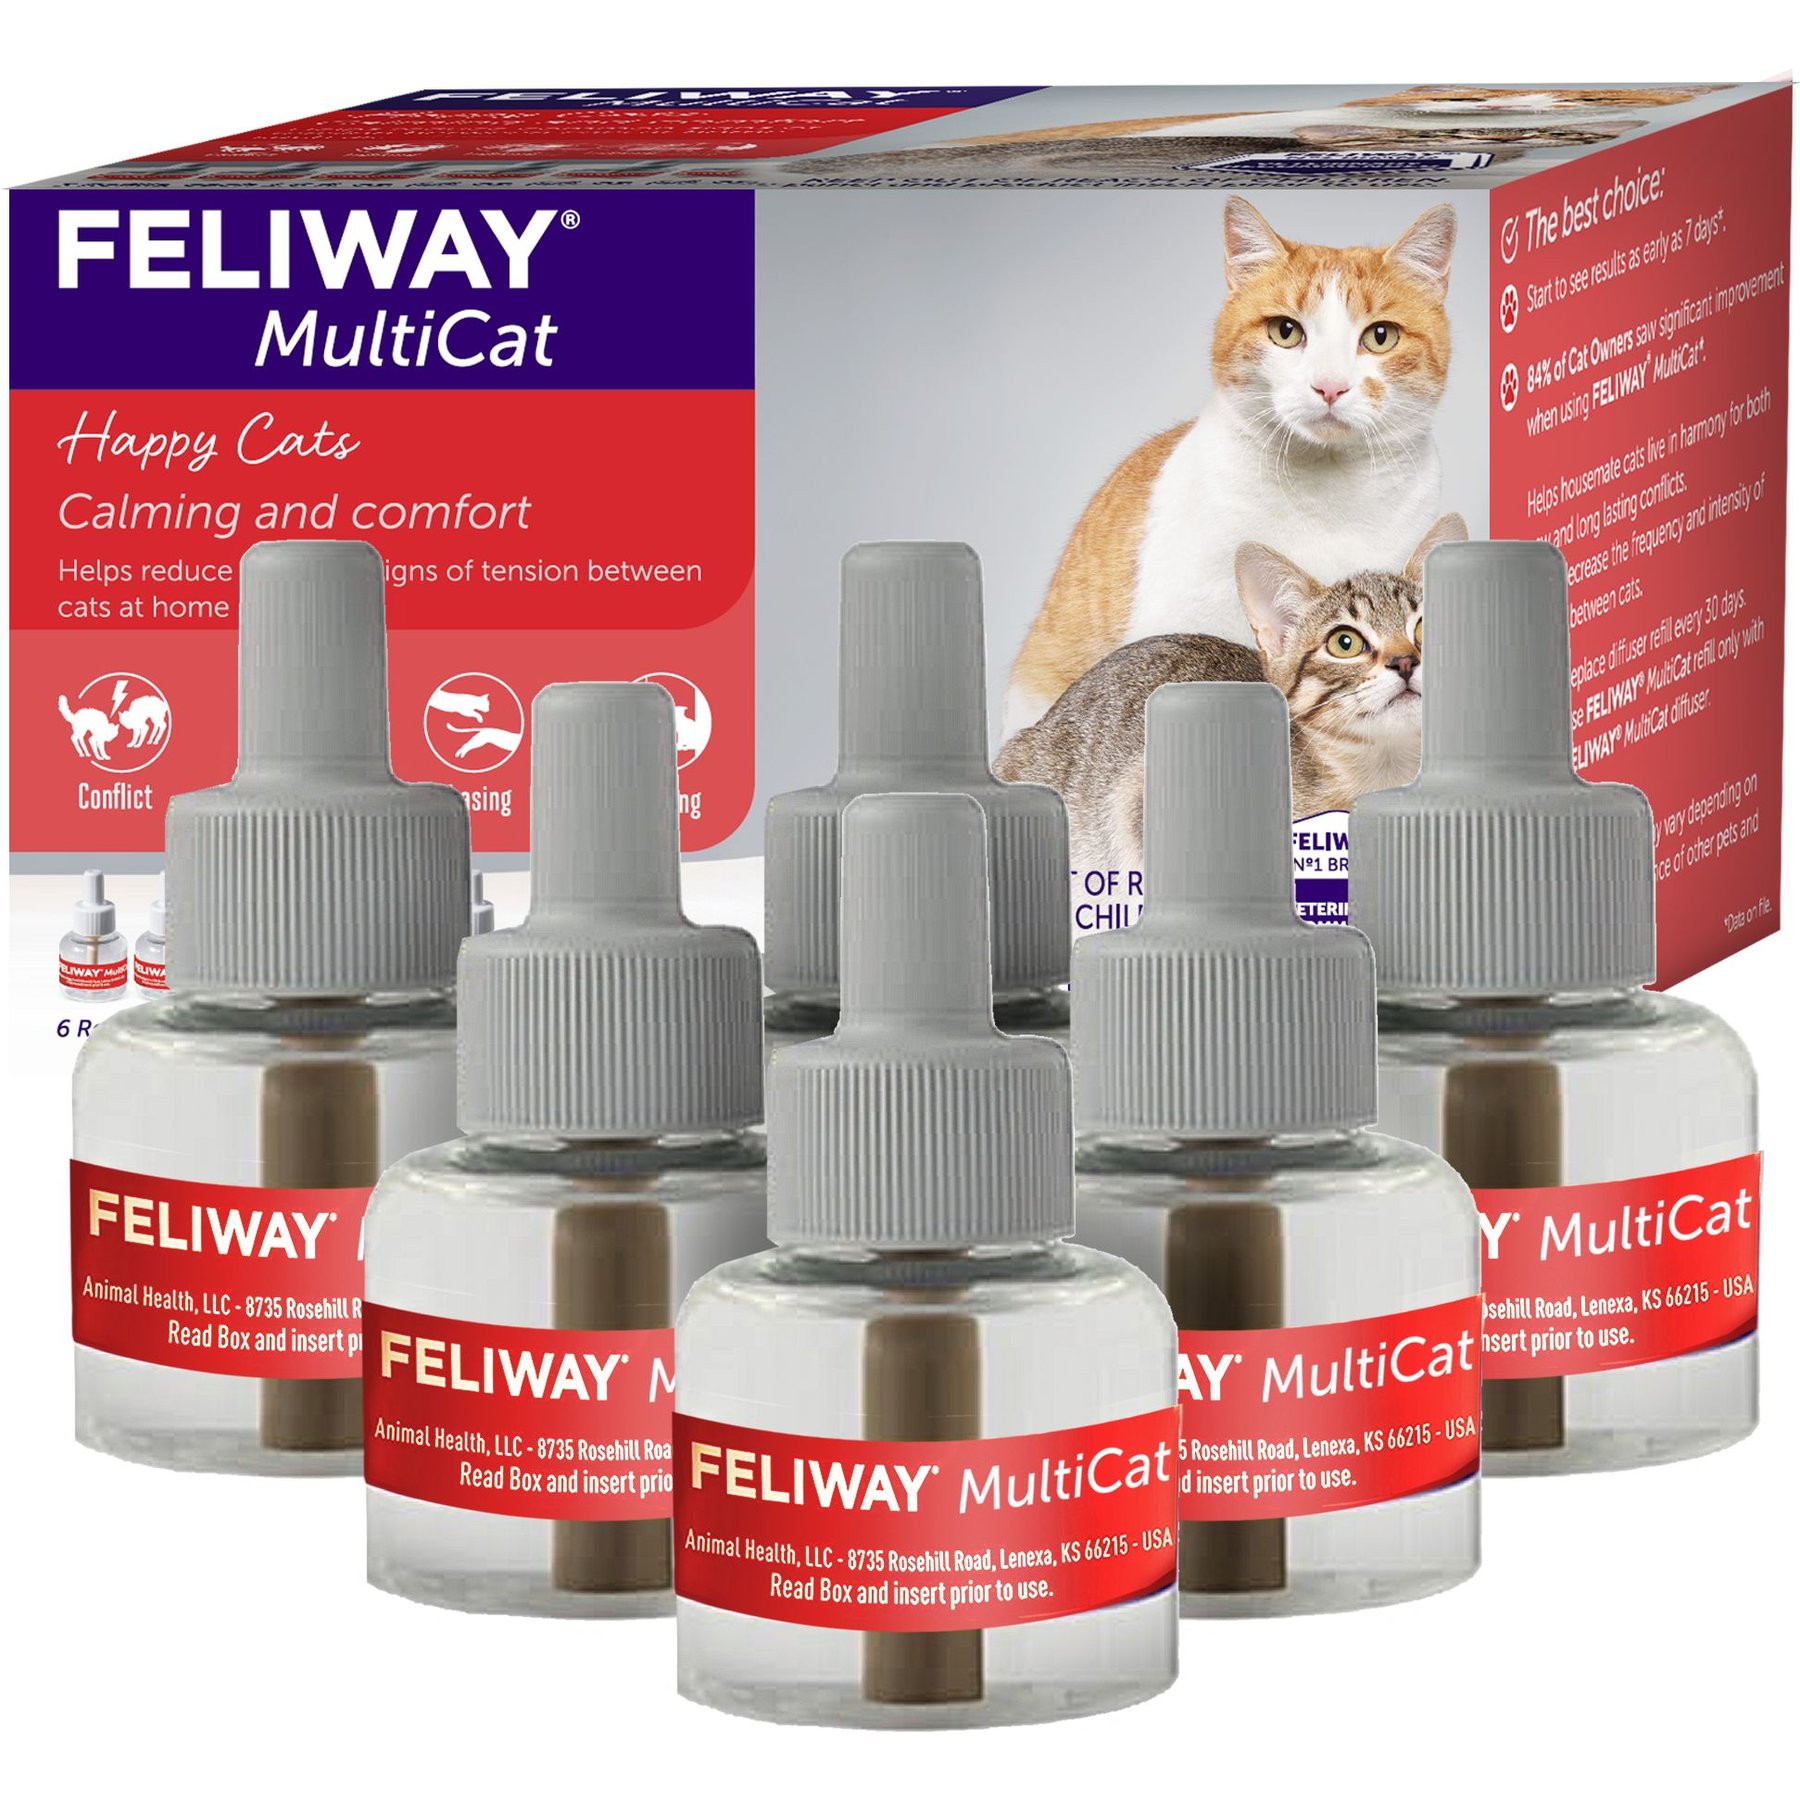 Feliway spray 60 ml - Anti-stress pour chat Feliway